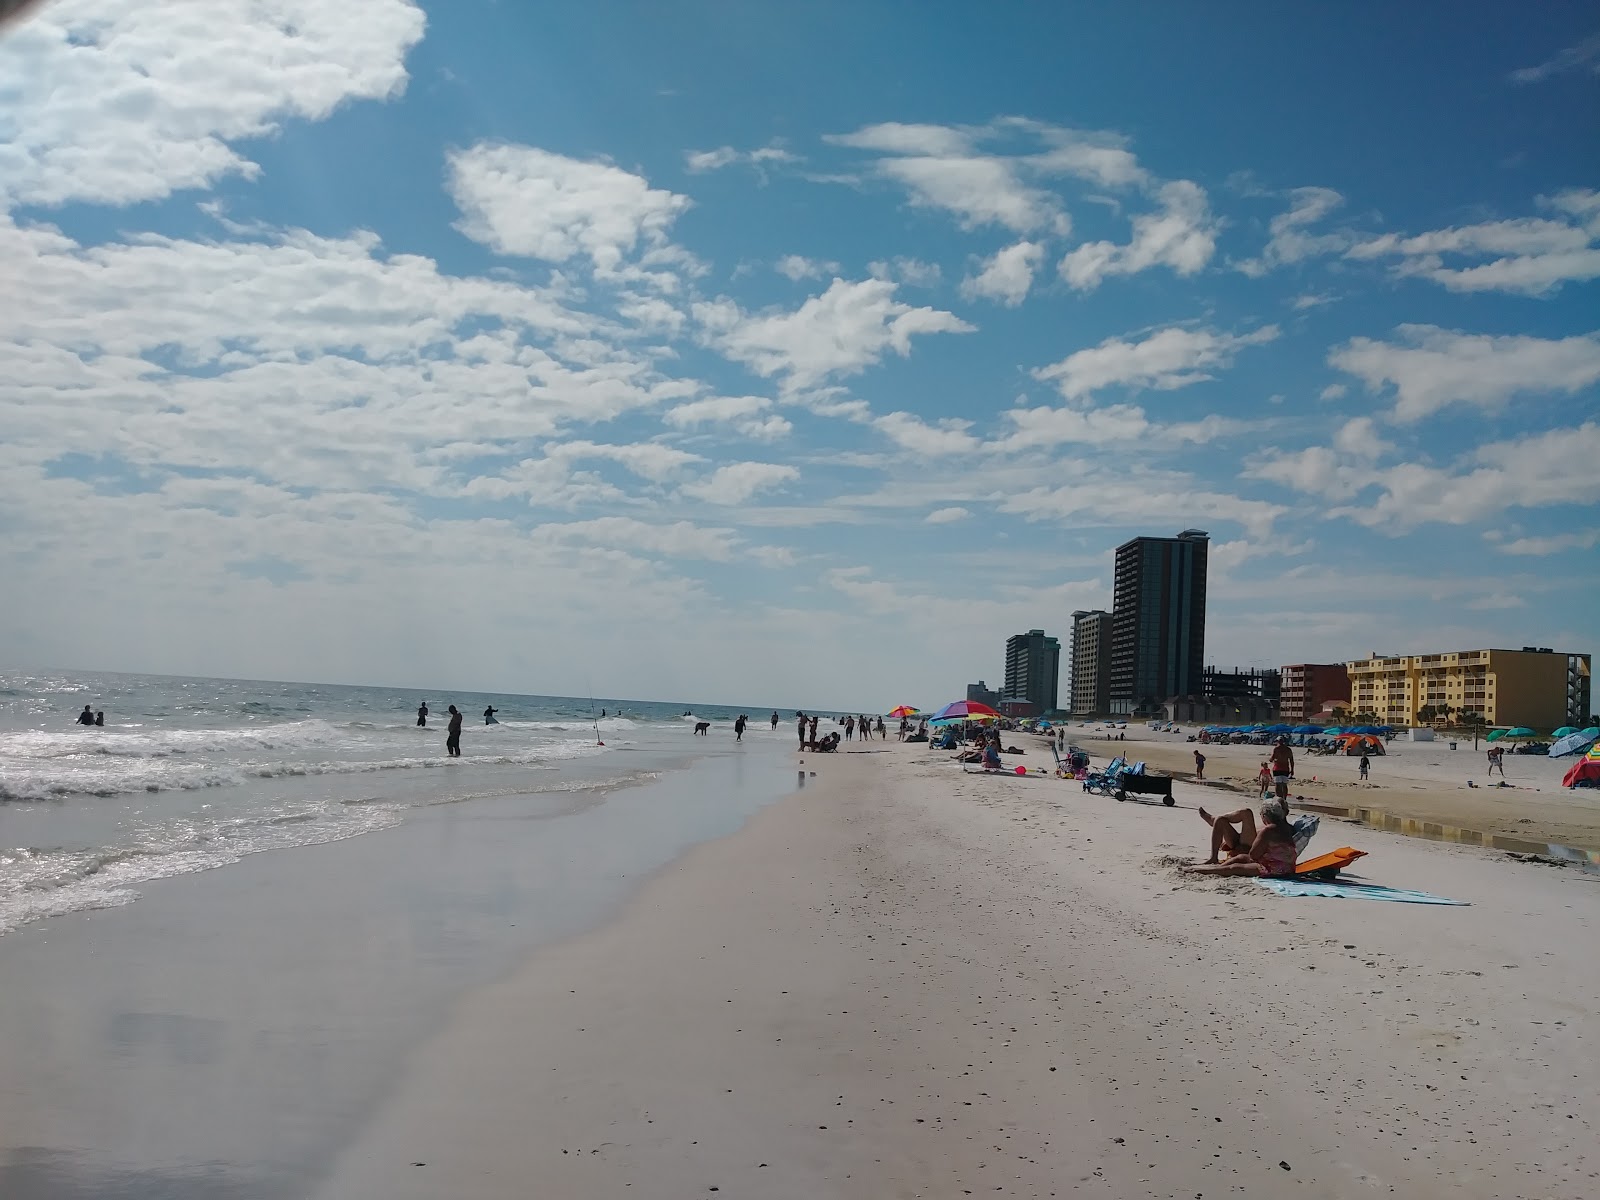 Gulf shores beach的照片 带有碧绿色纯水表面